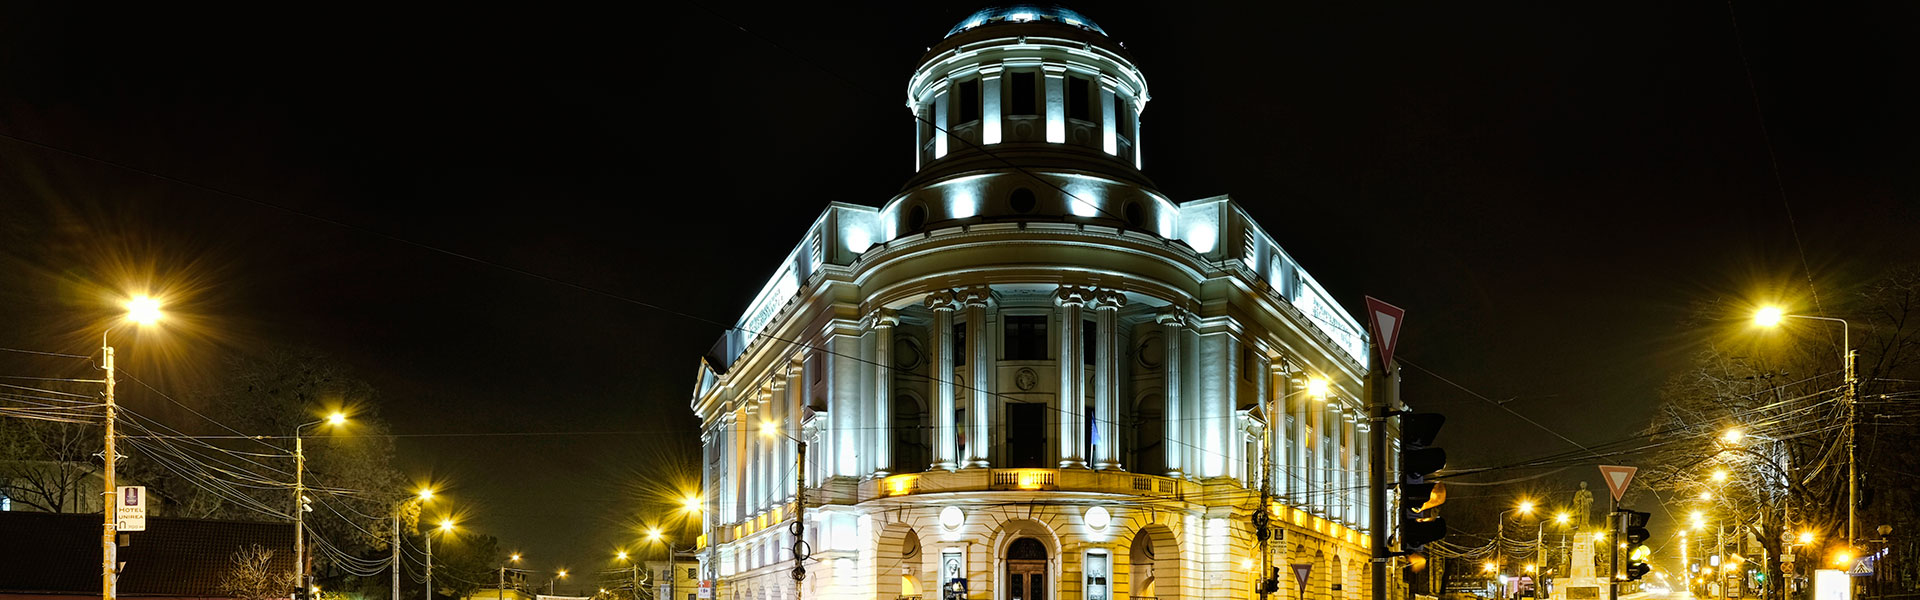 Biblioteca Centrala Universirtara 'M.Eminescu' Iasi